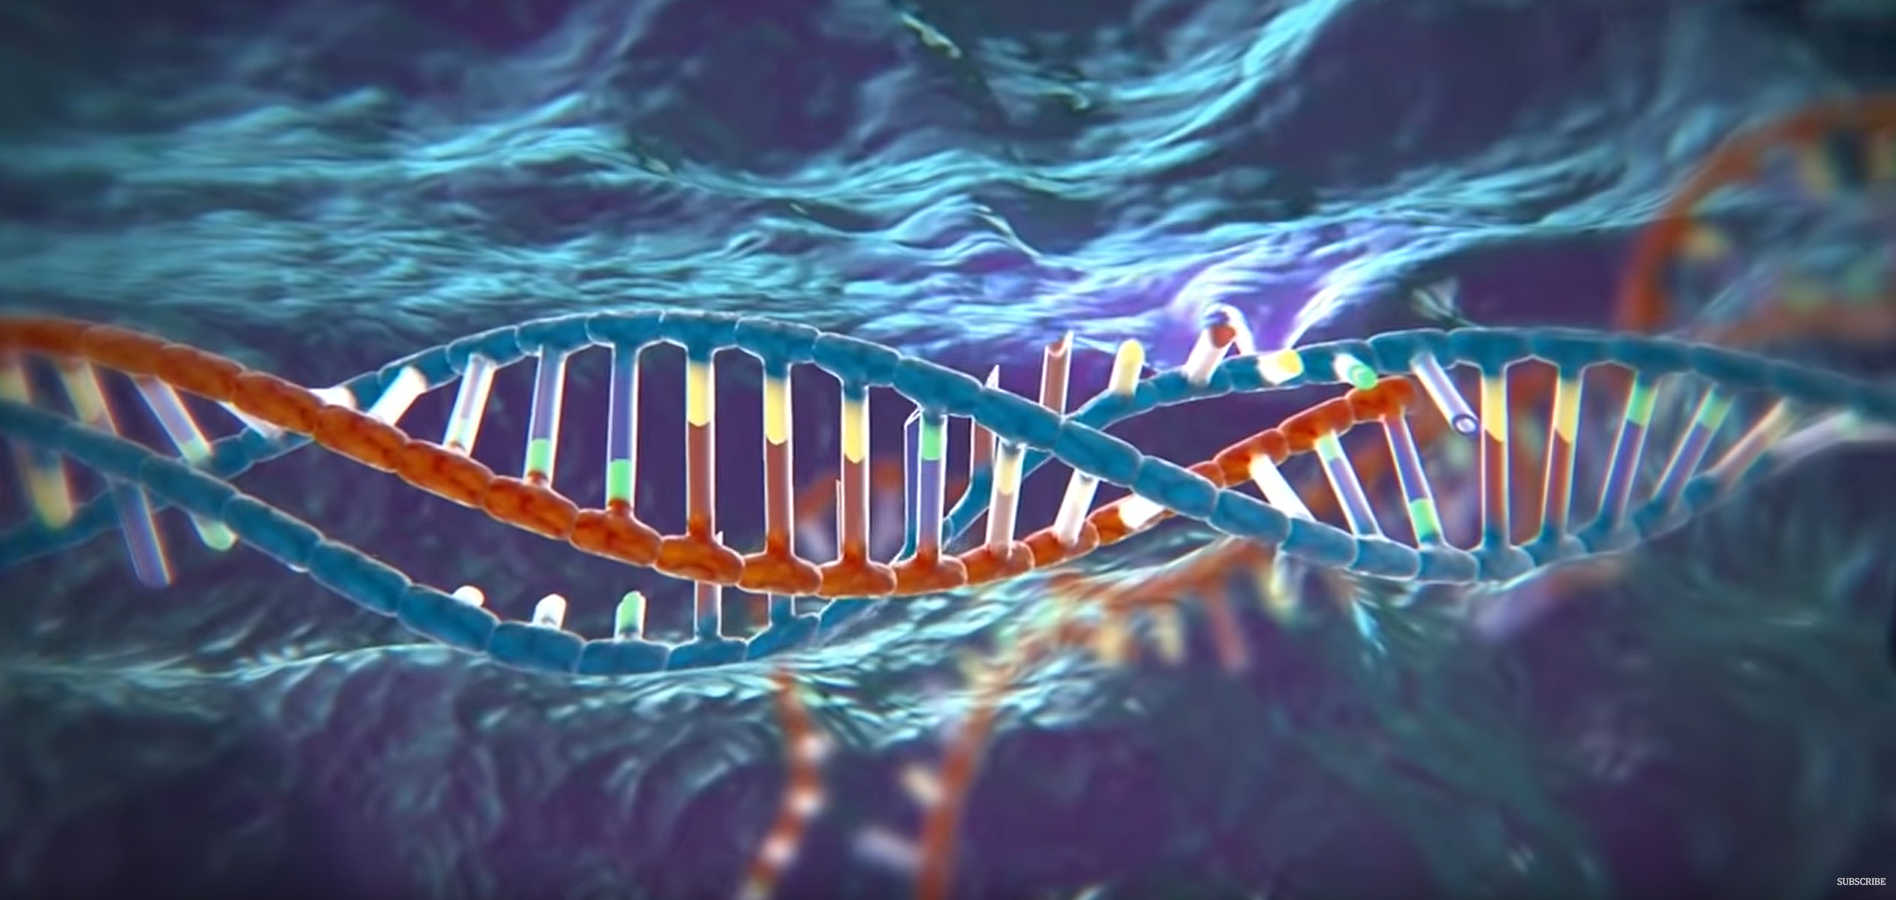 Video – CRISPR: A new genetic engineering technique